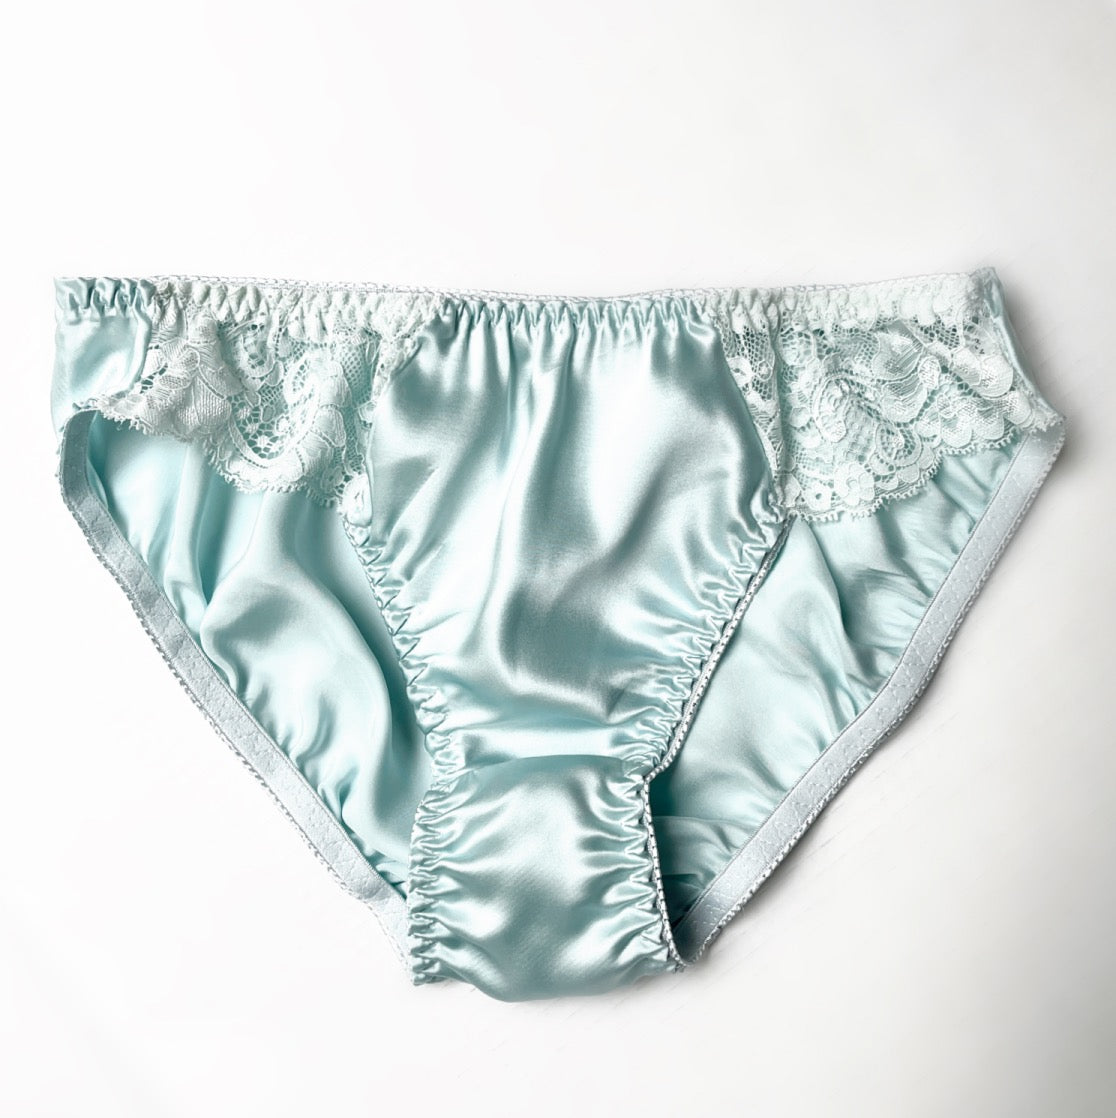 Baberdicy Underwear Women, Women's Solid Color Large Size Leak